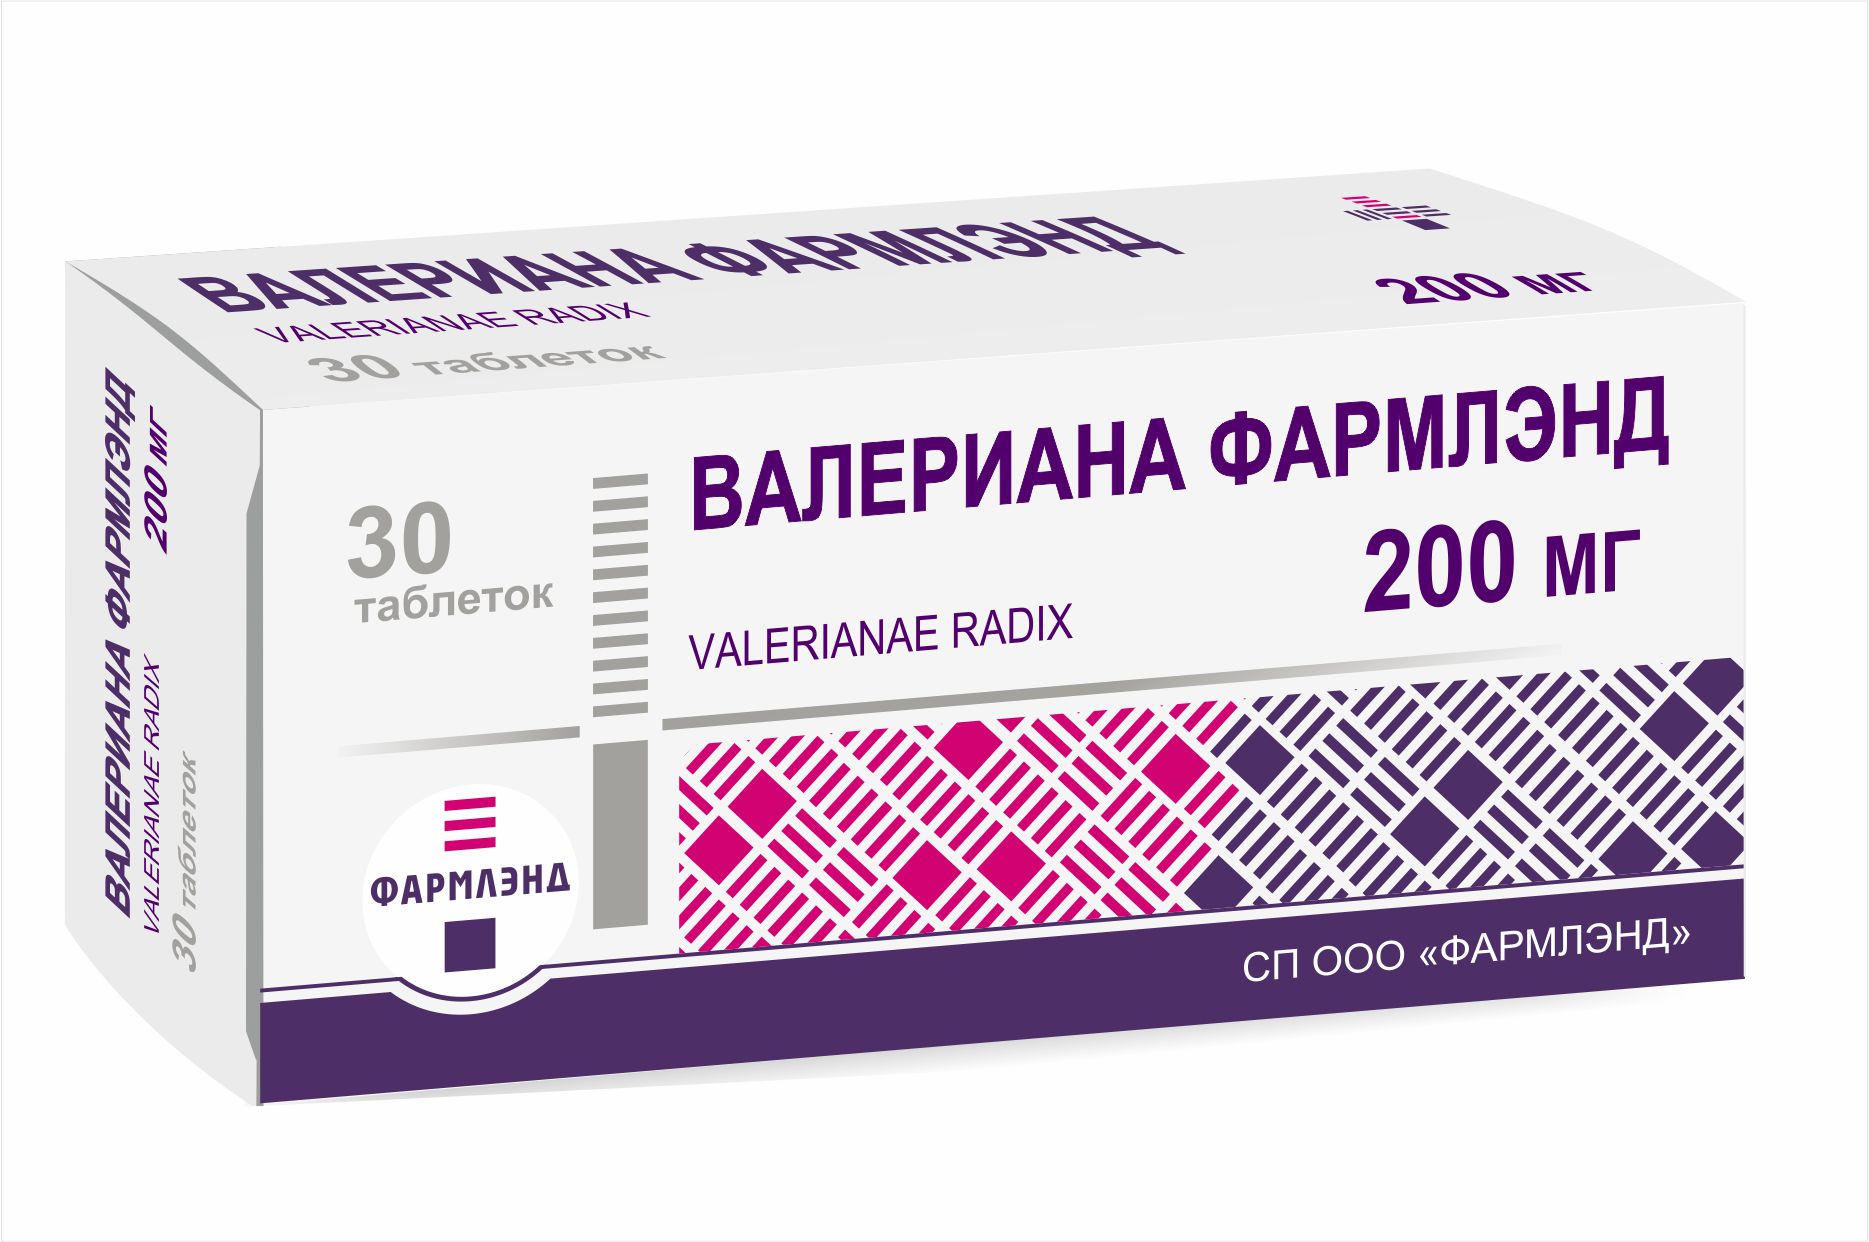 Валерьянка препарат. Валериана в таблетках 200 мг. Таблетки валерианы 200мг. Экстракт валерианы 200мг в таблетках. Валерьянка в таблетках 200мг.